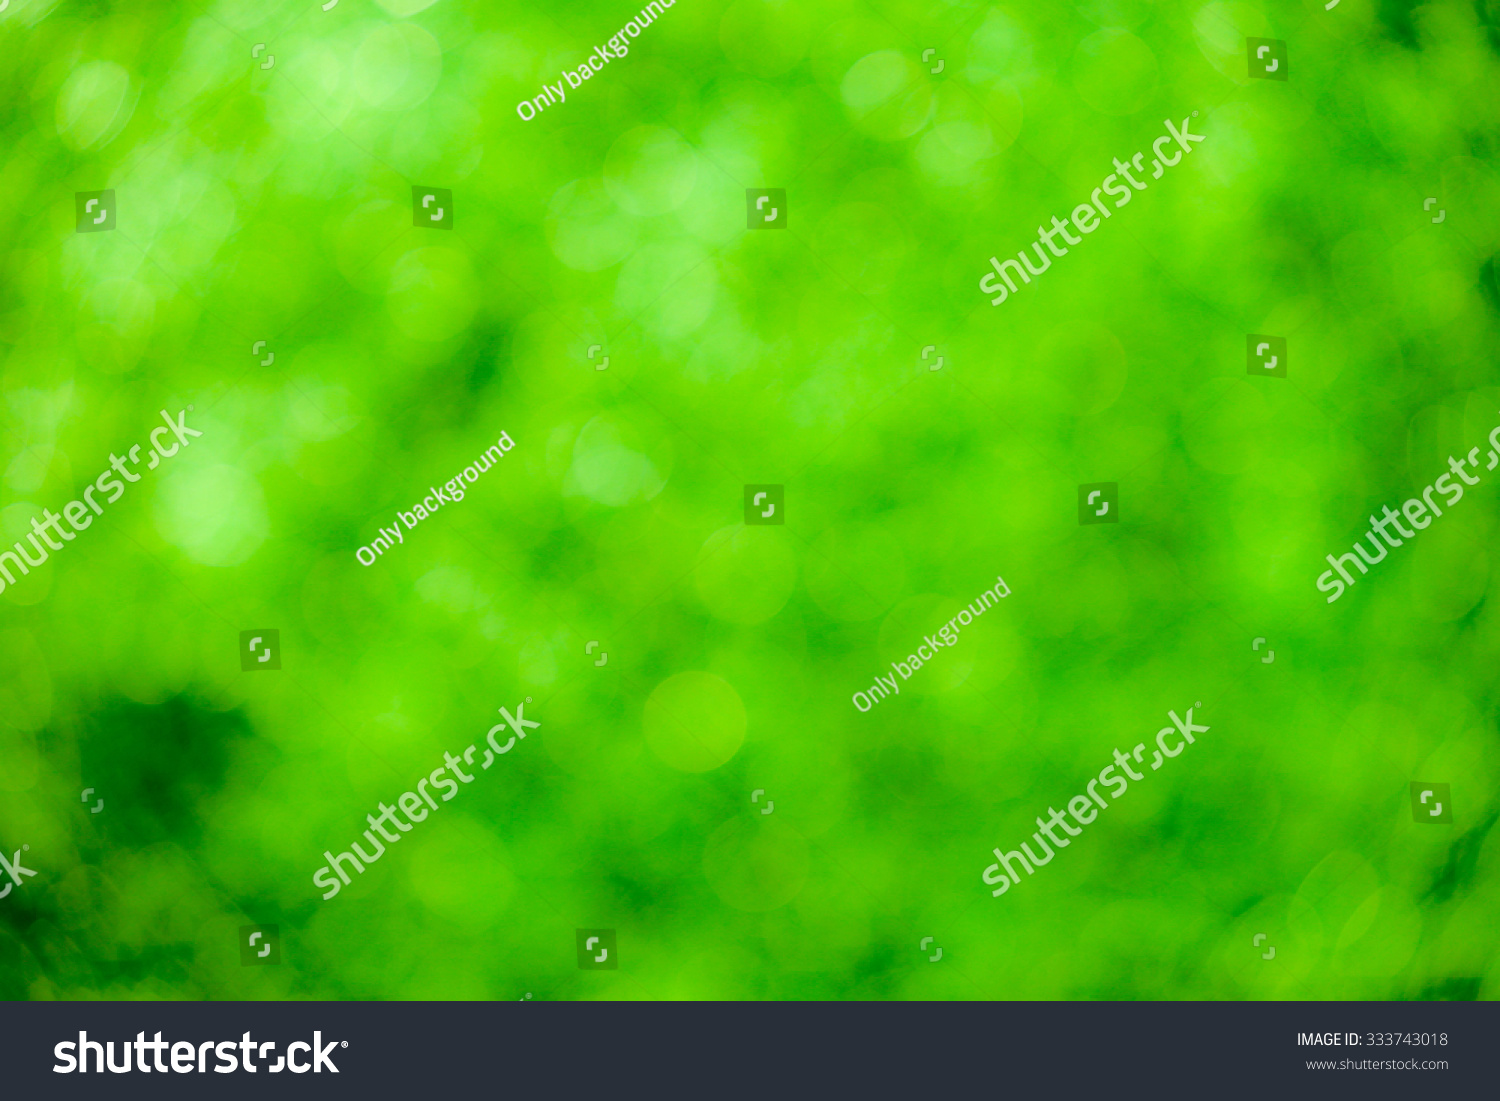 Green bokeh soft background #333743018